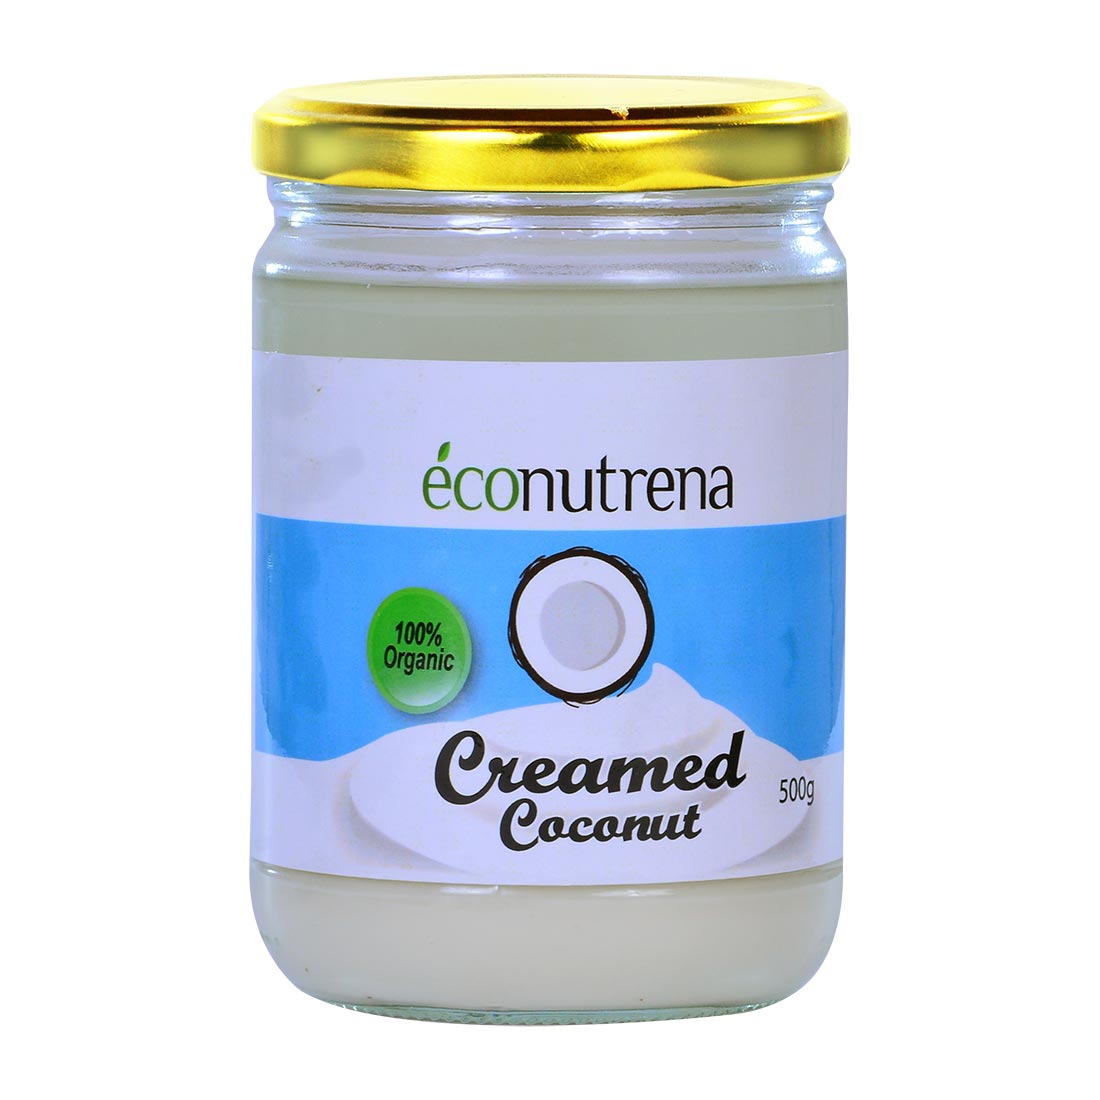 Organic and Fair trade Creamed Coconut